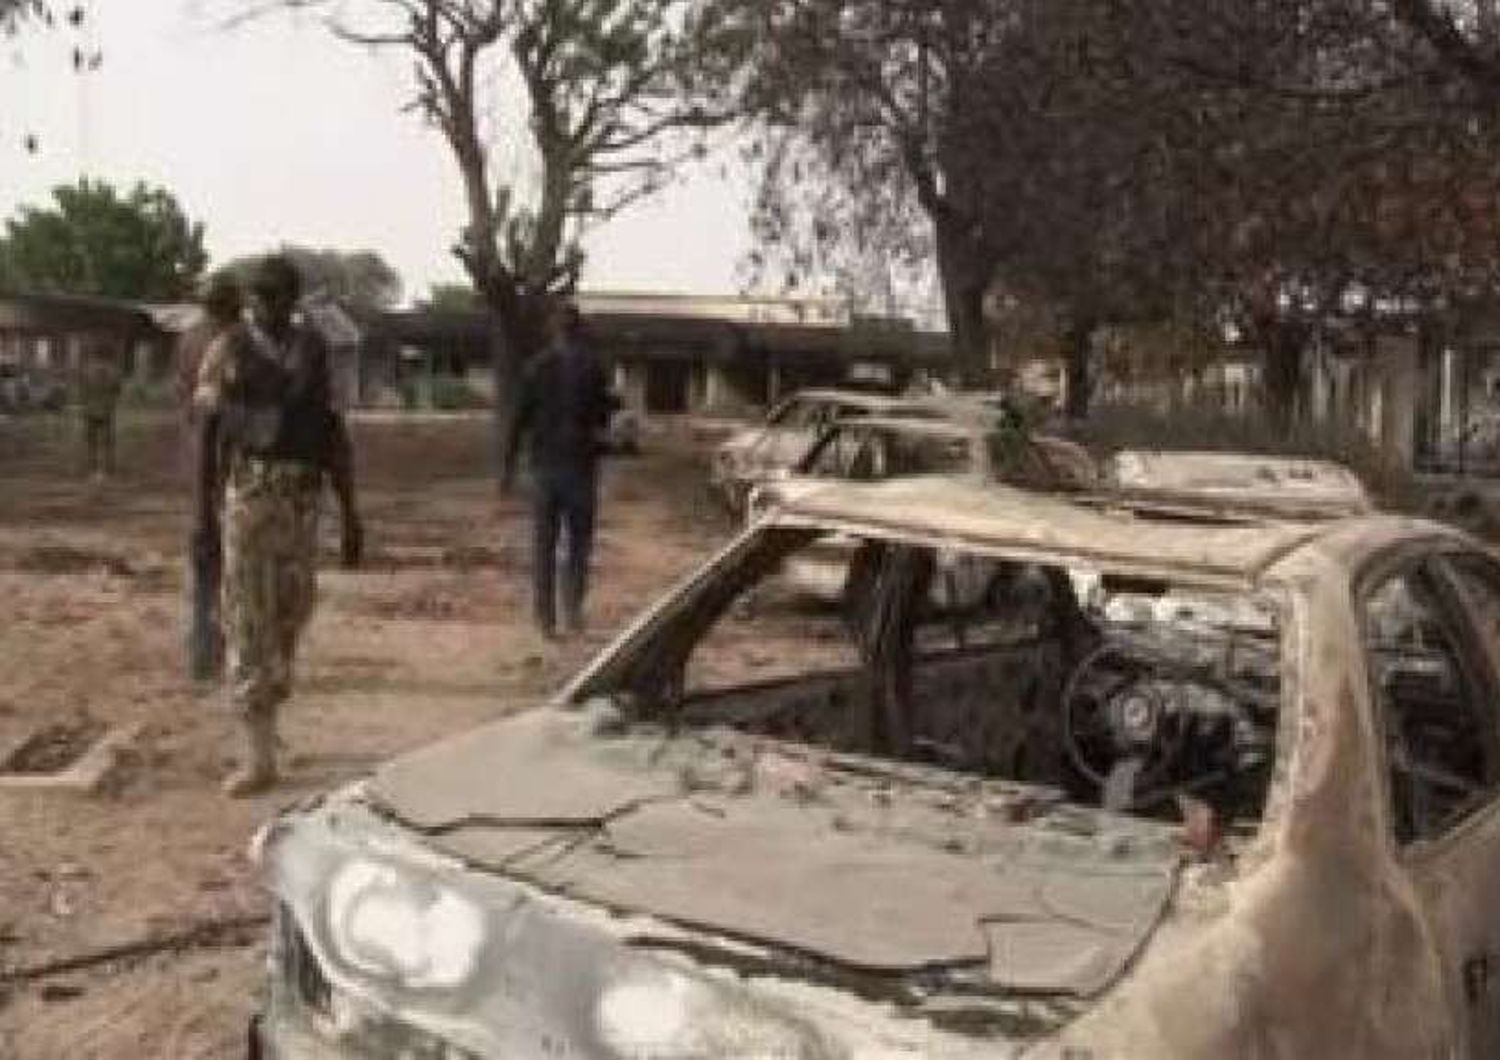 Boko Haram: attentatrice suicida provoca 6 morti a Maiduguri